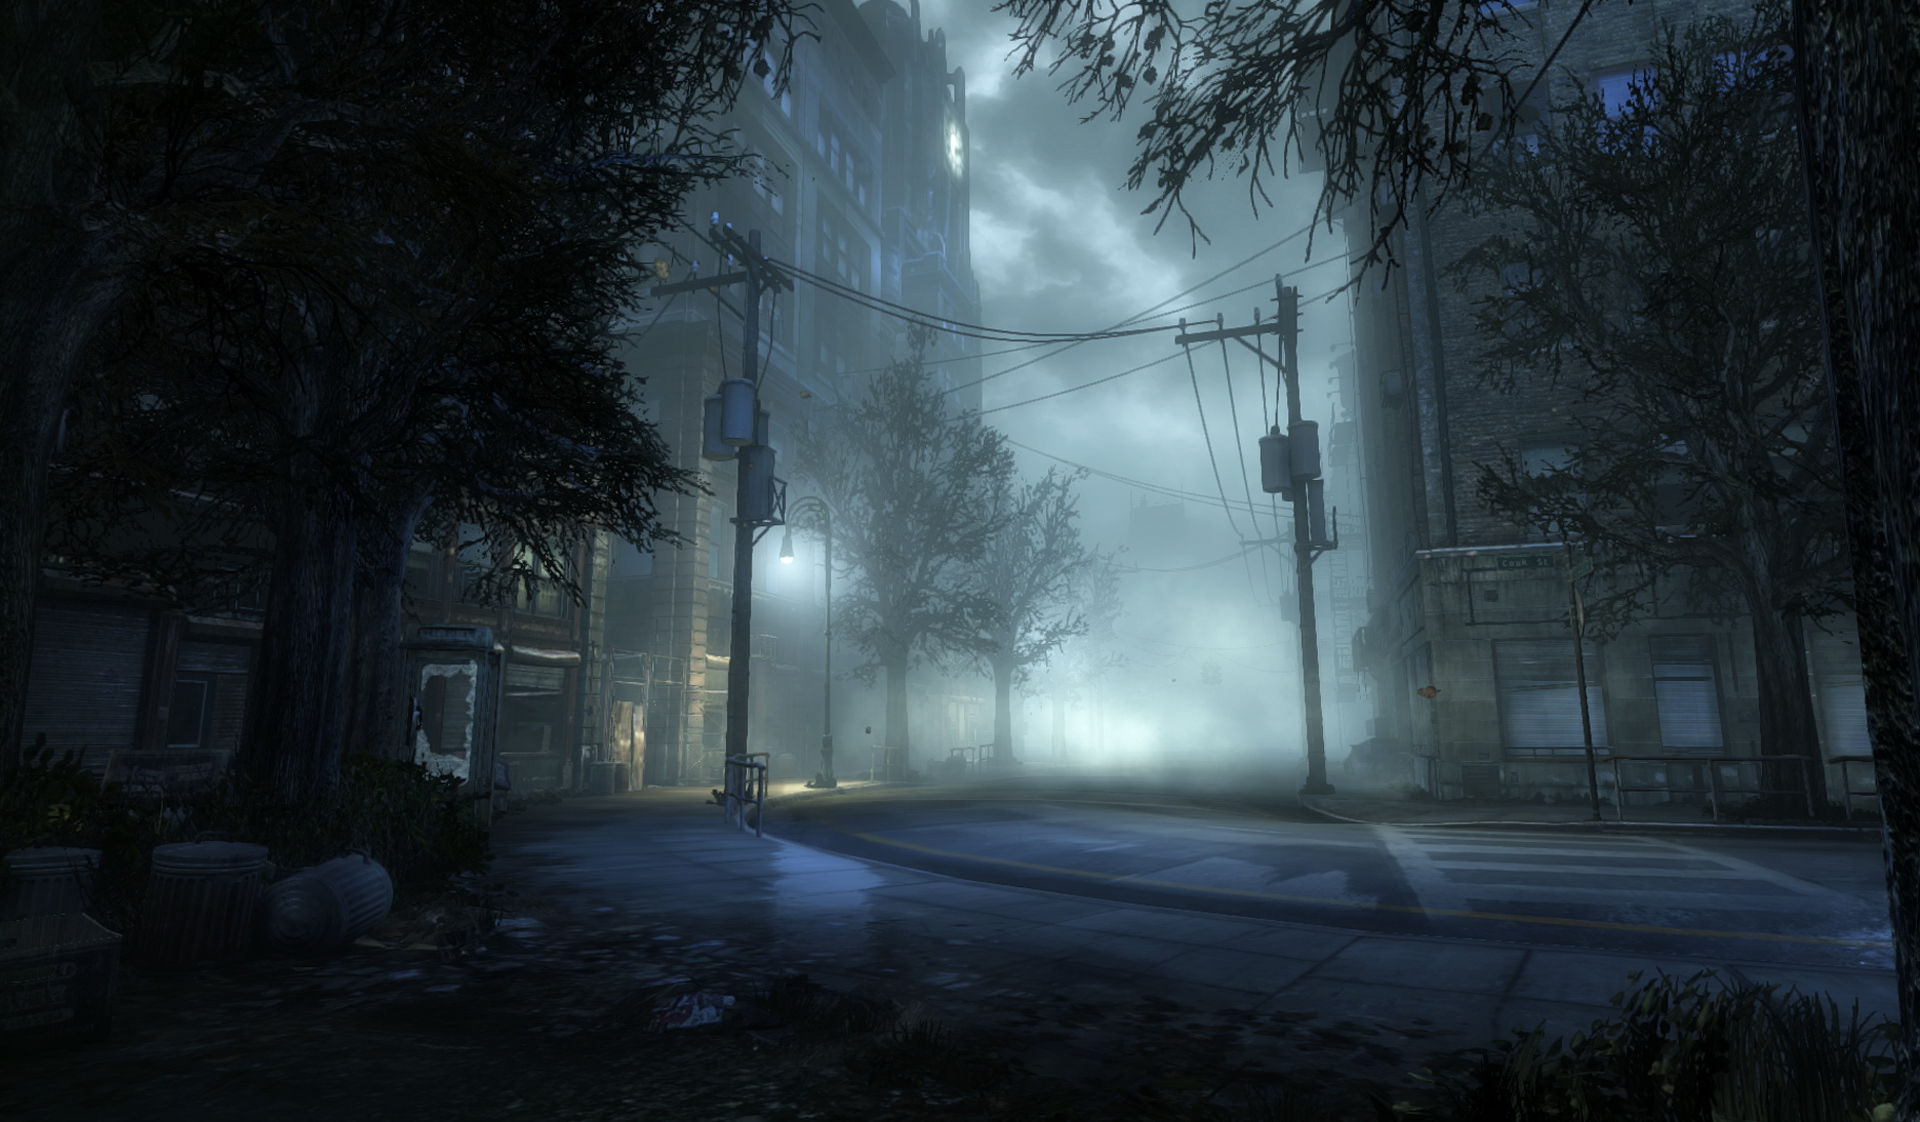 Silent Hill: Downpour  HD wallpapers, Desktop wallpaper - most viewed